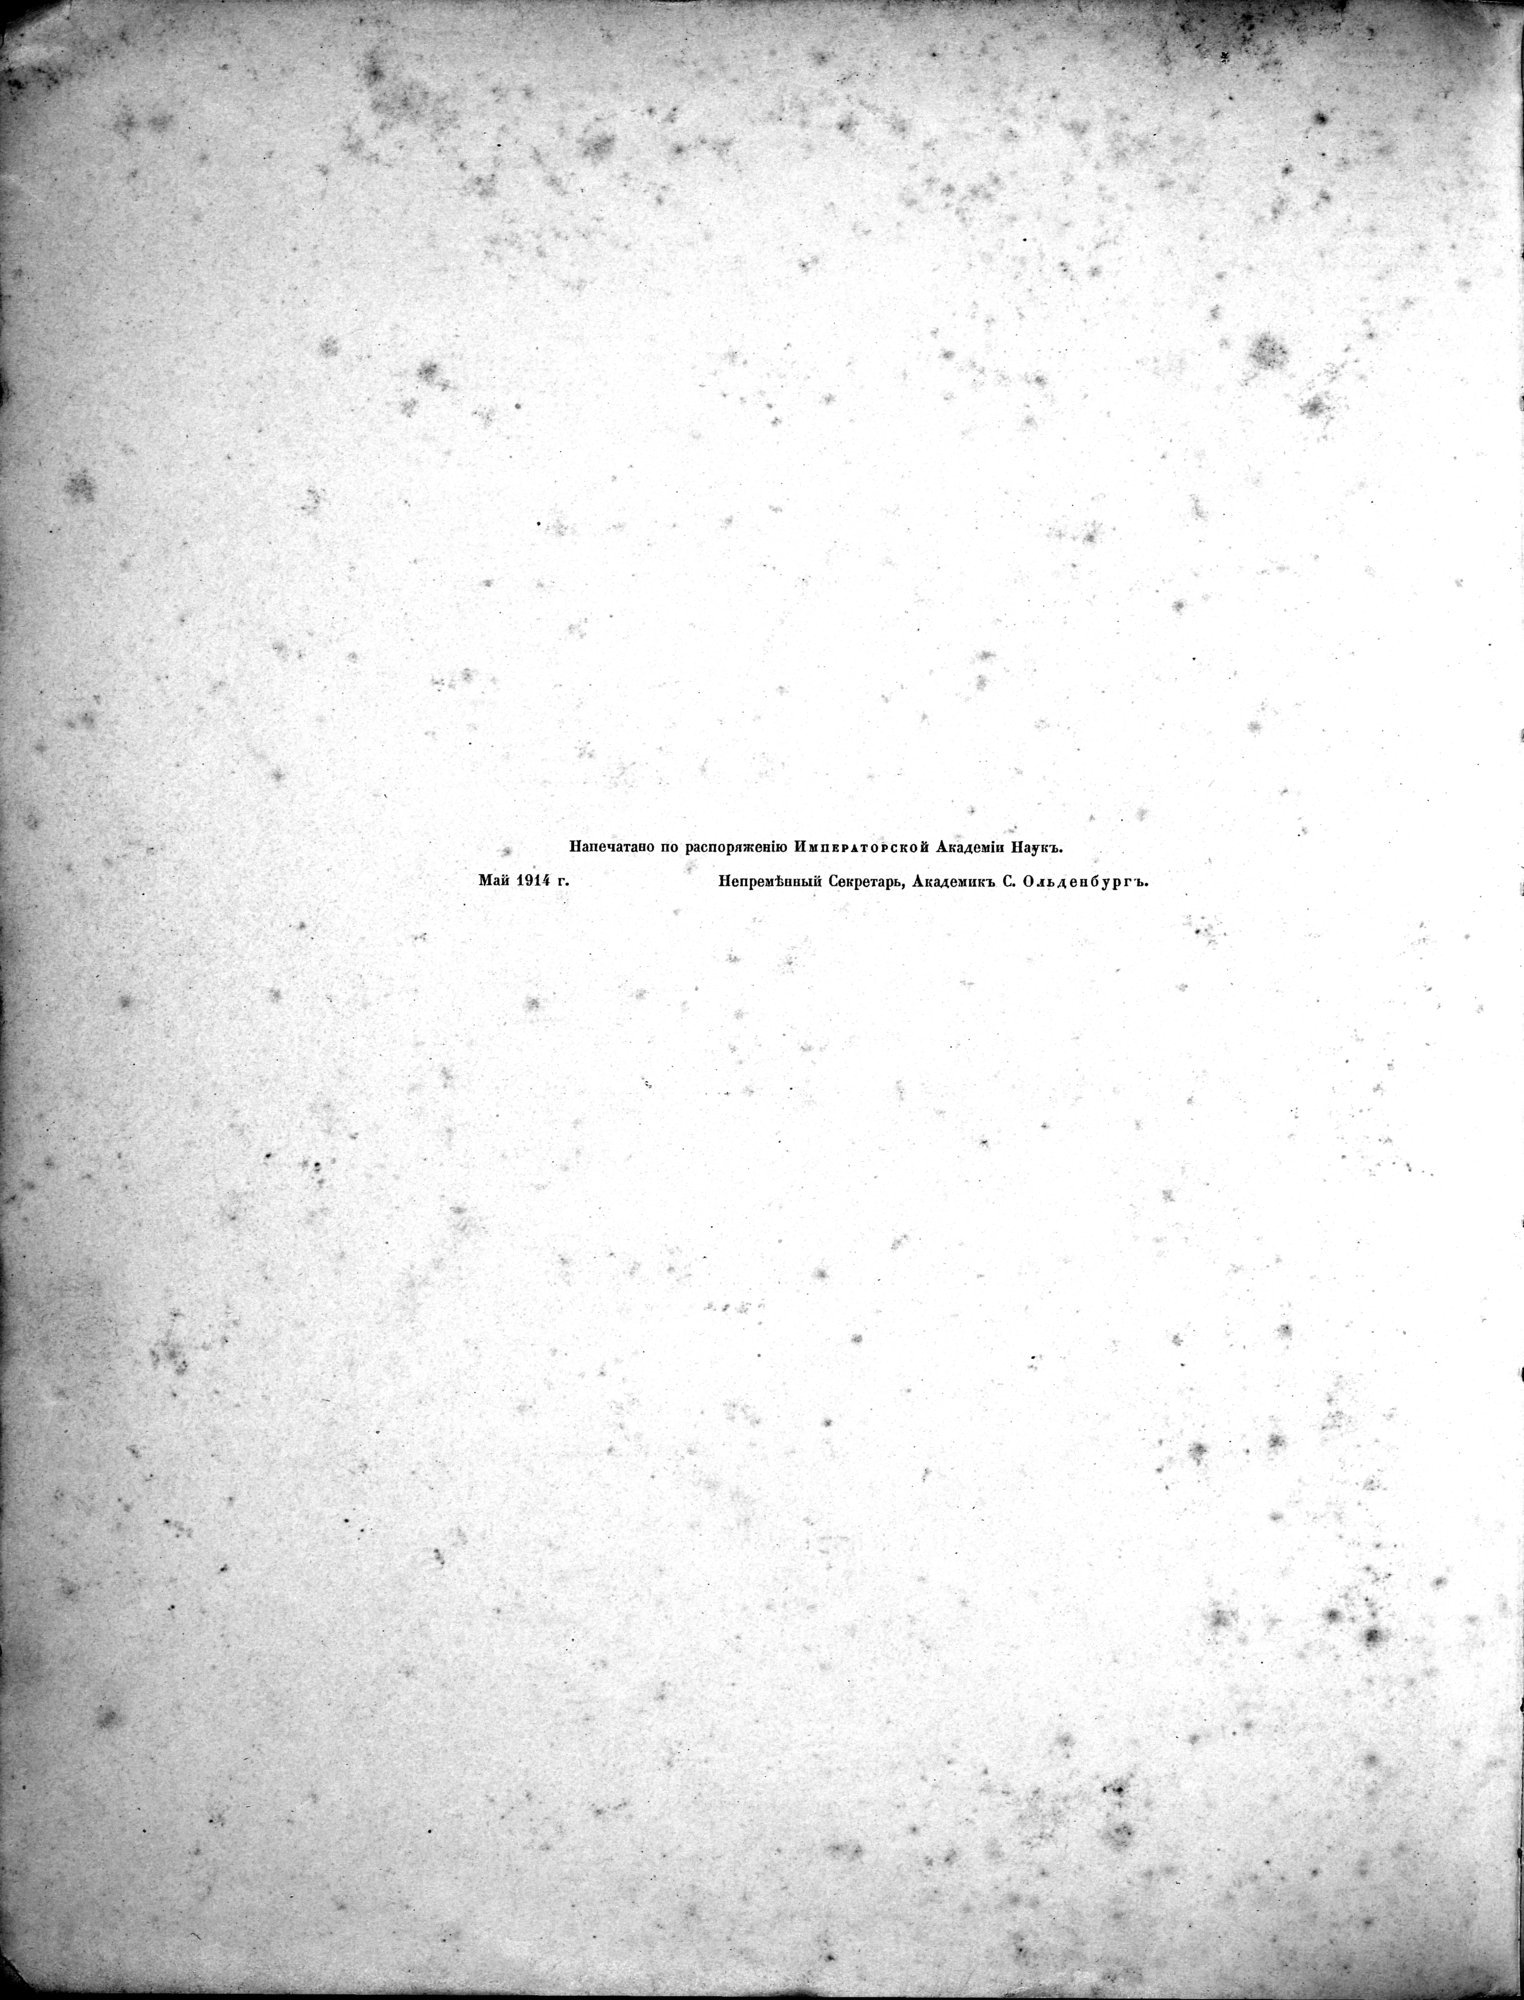 Russkaia Turkestanskaia Ekspeditsiia, 1909-1910 goda : vol.1 / Page 4 (Grayscale High Resolution Image)